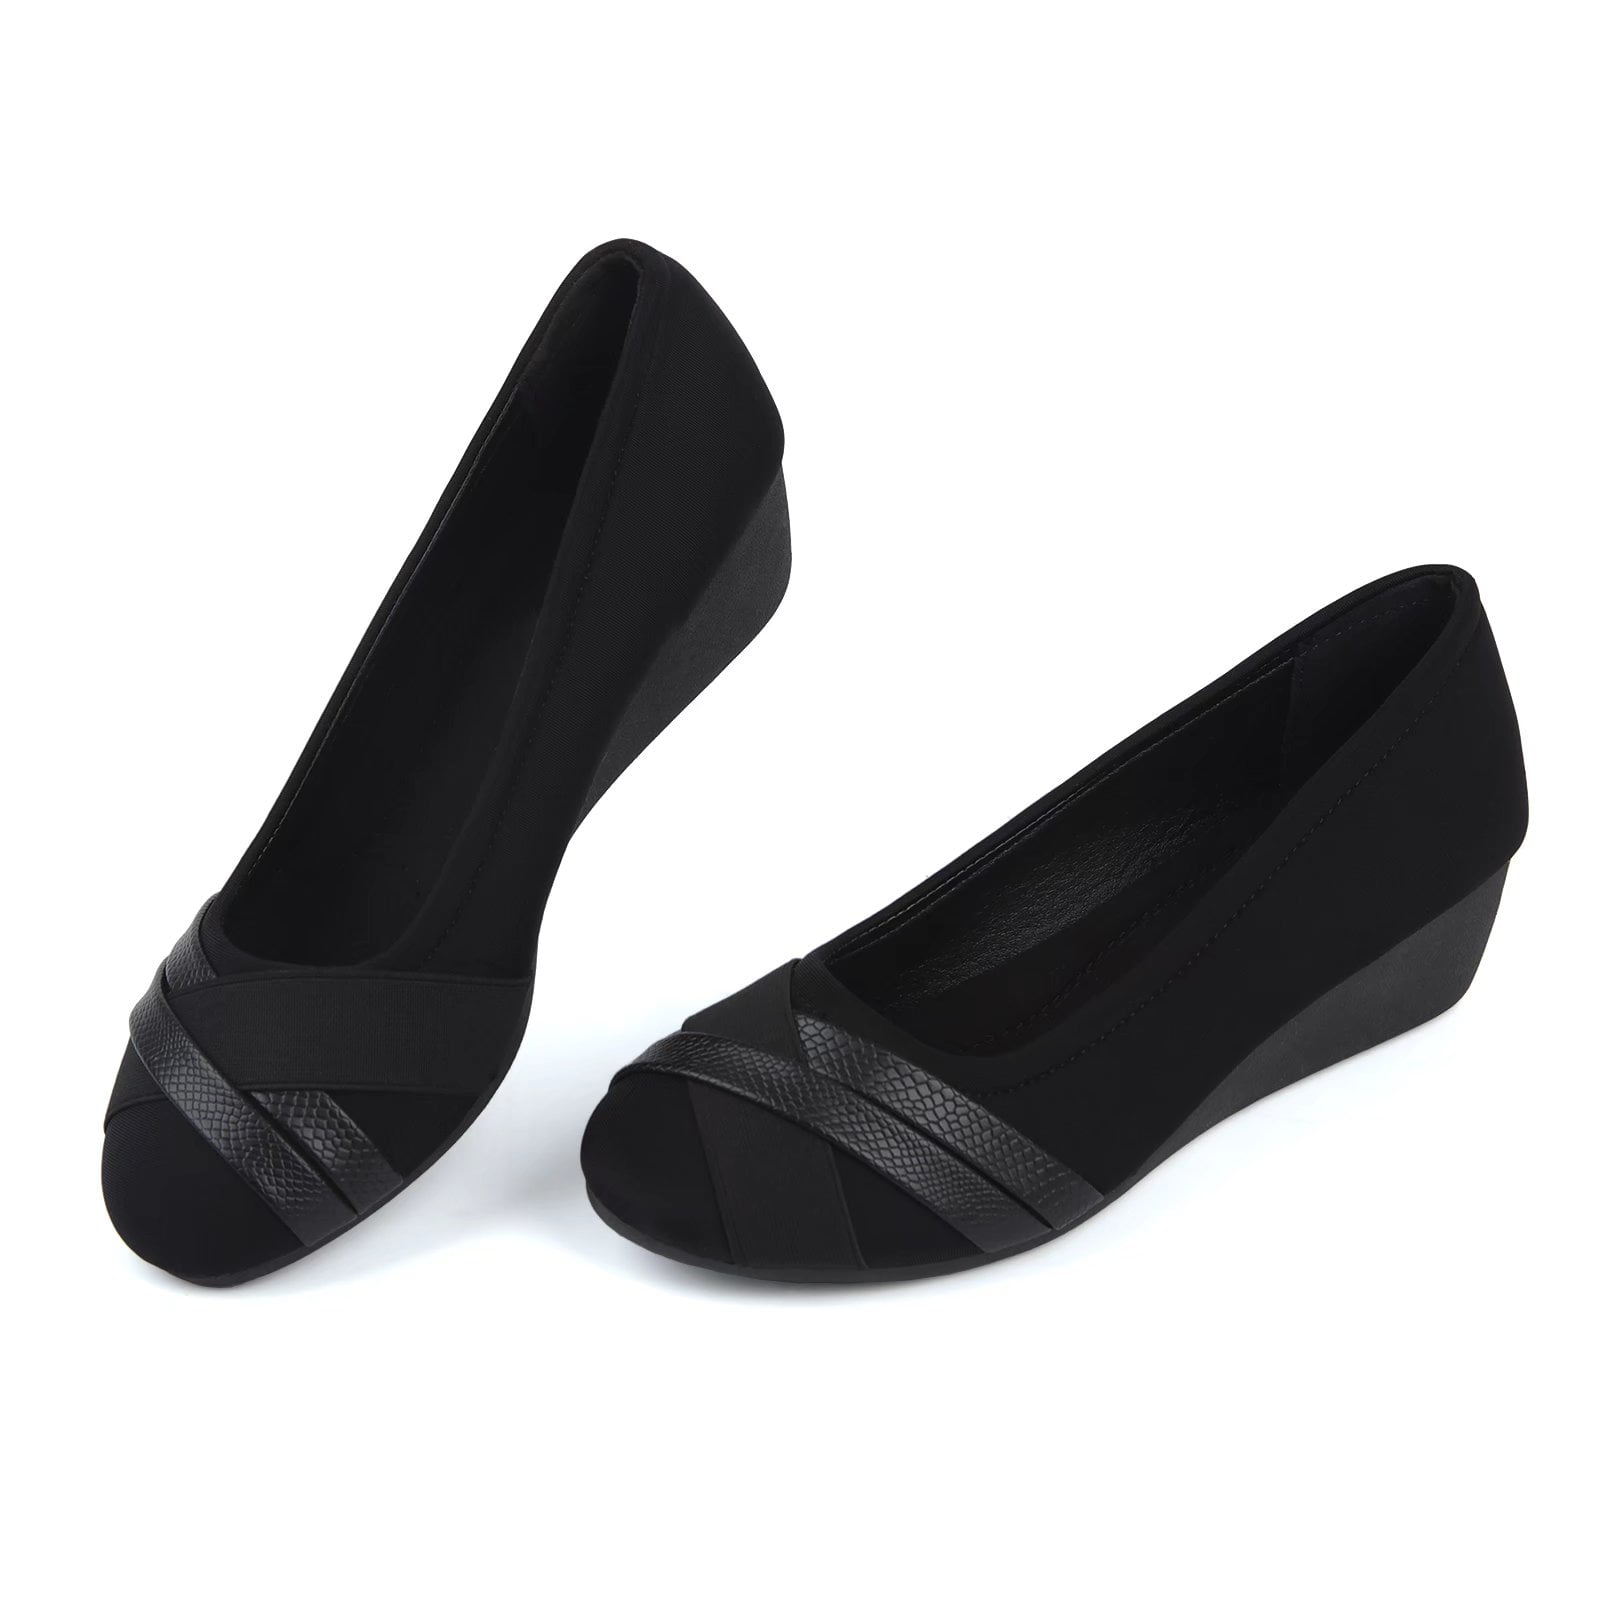 MUSSHOE Flats for Women Comfortable Flats Shoes for Women's Flats Ballet Flats for Women